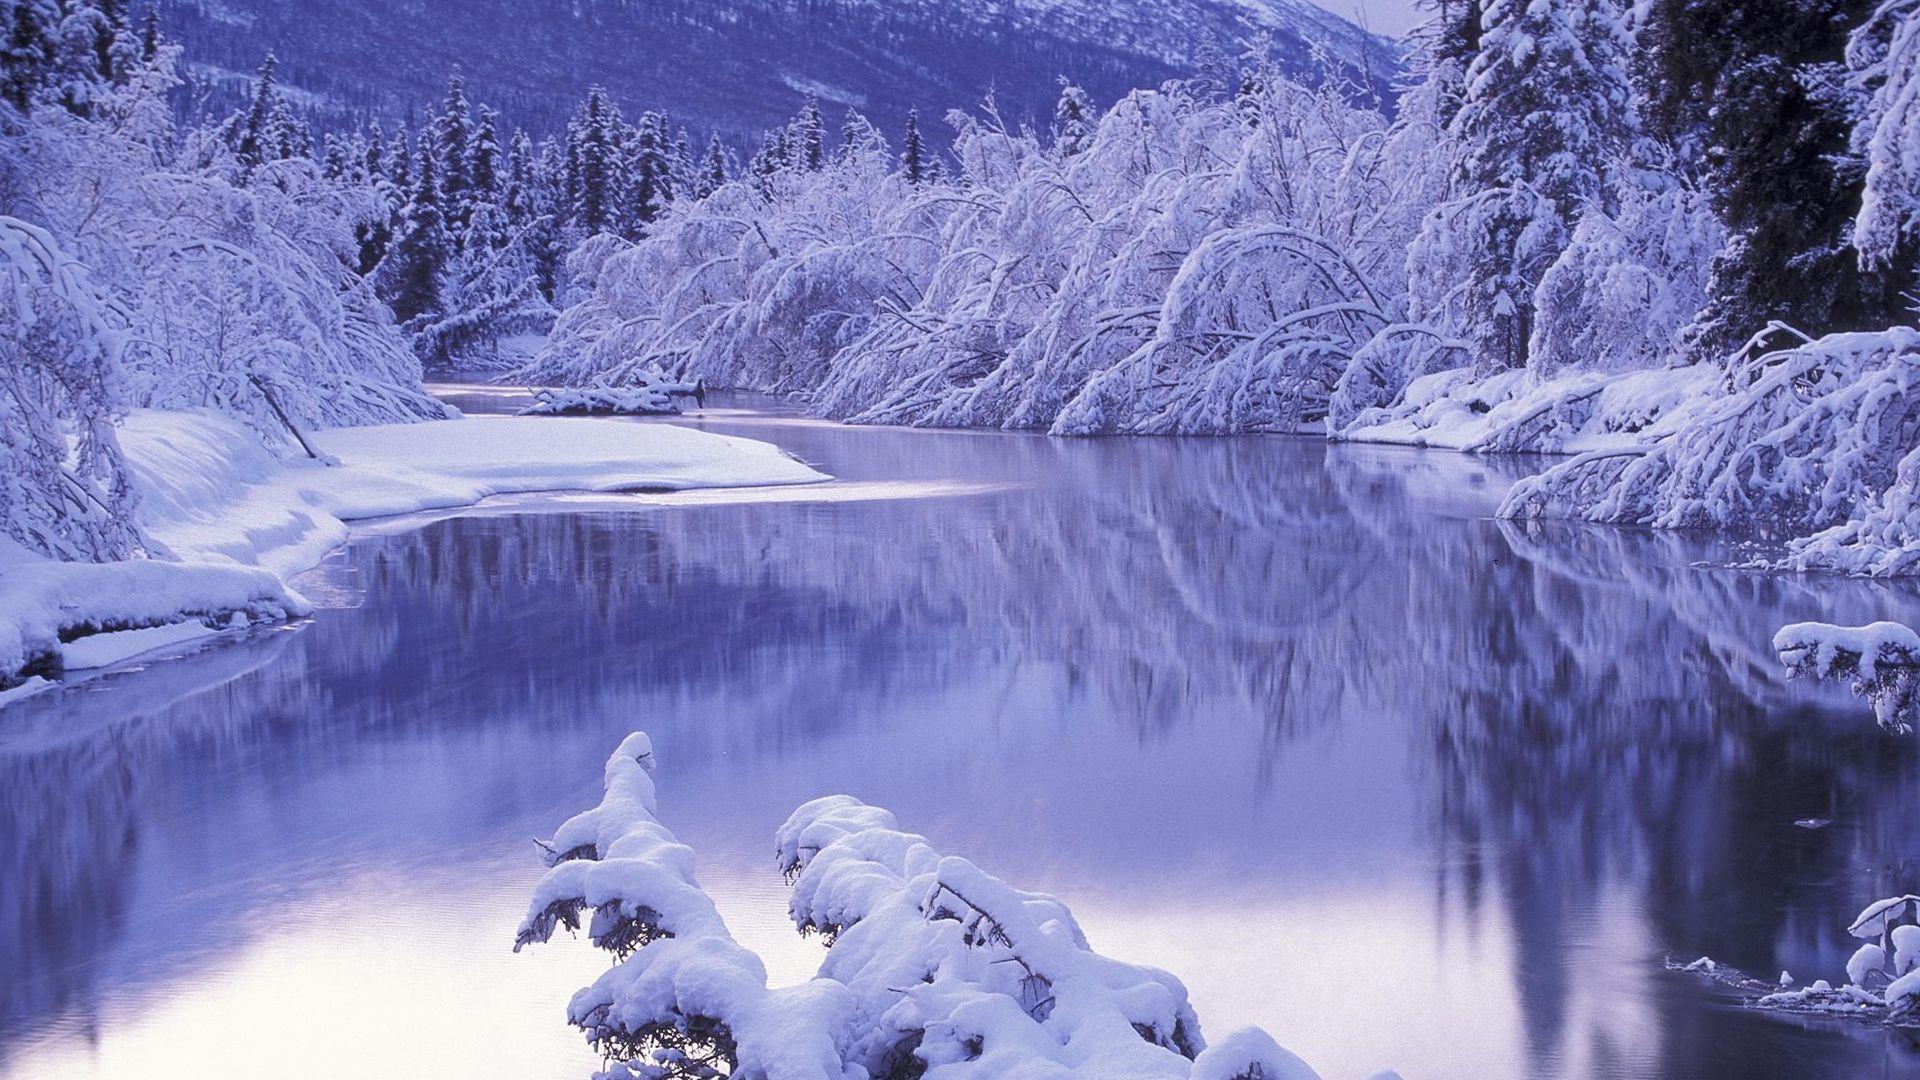 Download Wallpaper 1920x1080 snow, white, winter, nature, scenery